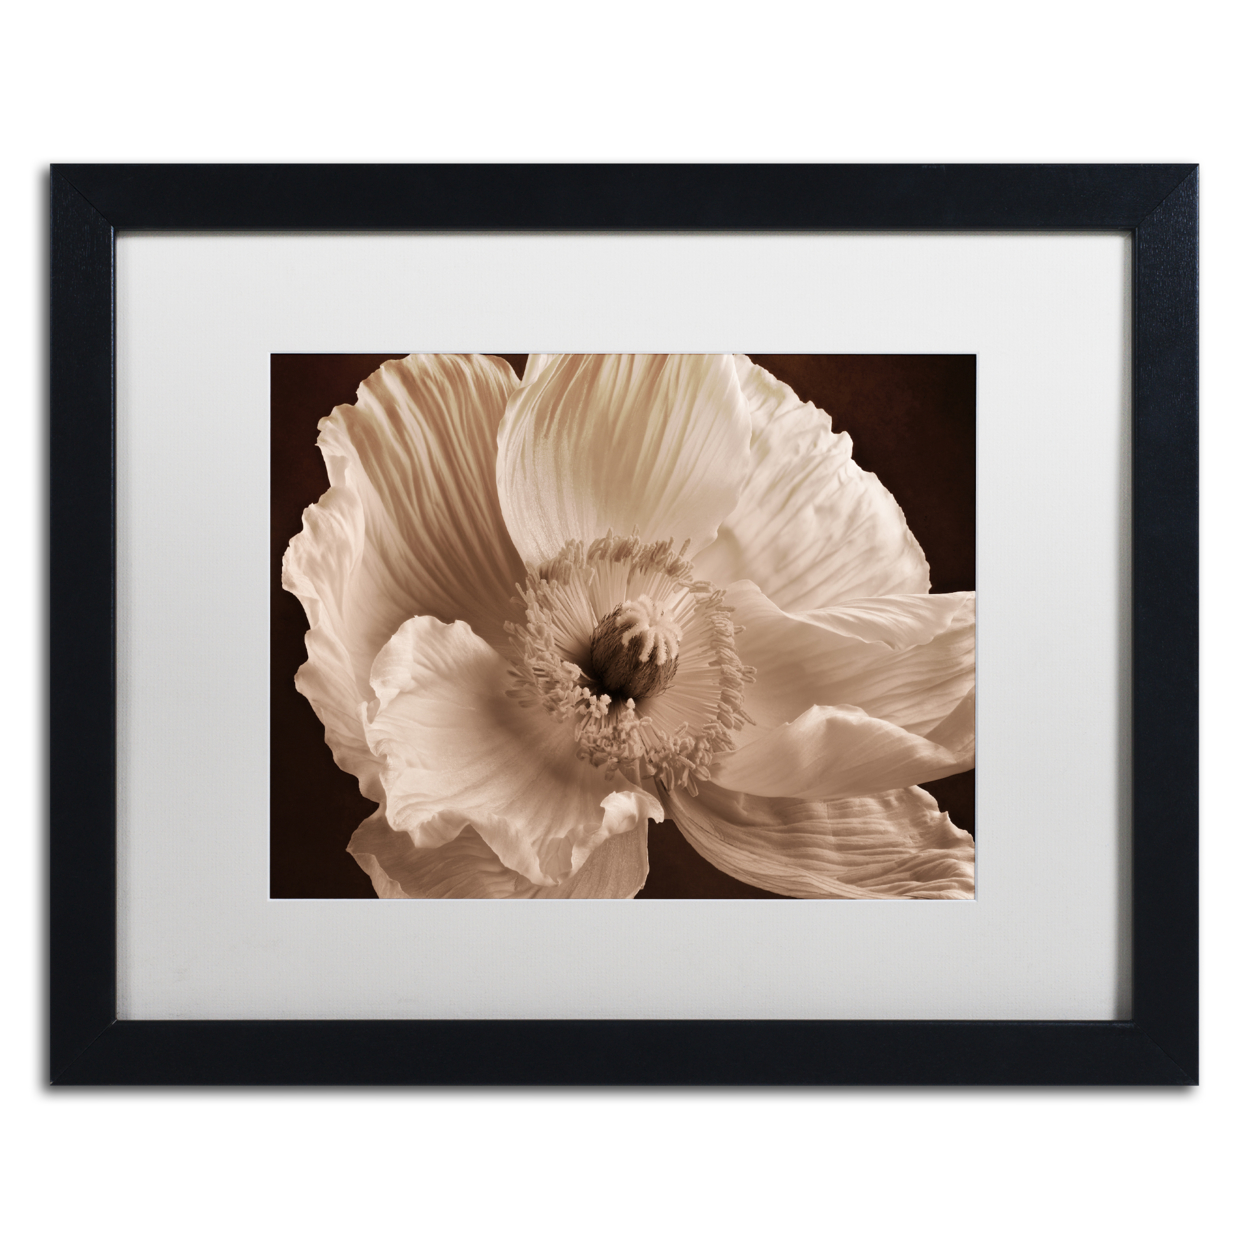 Cora Niele 'Sepia Poppy I' Black Wooden Framed Art 18 X 22 Inches